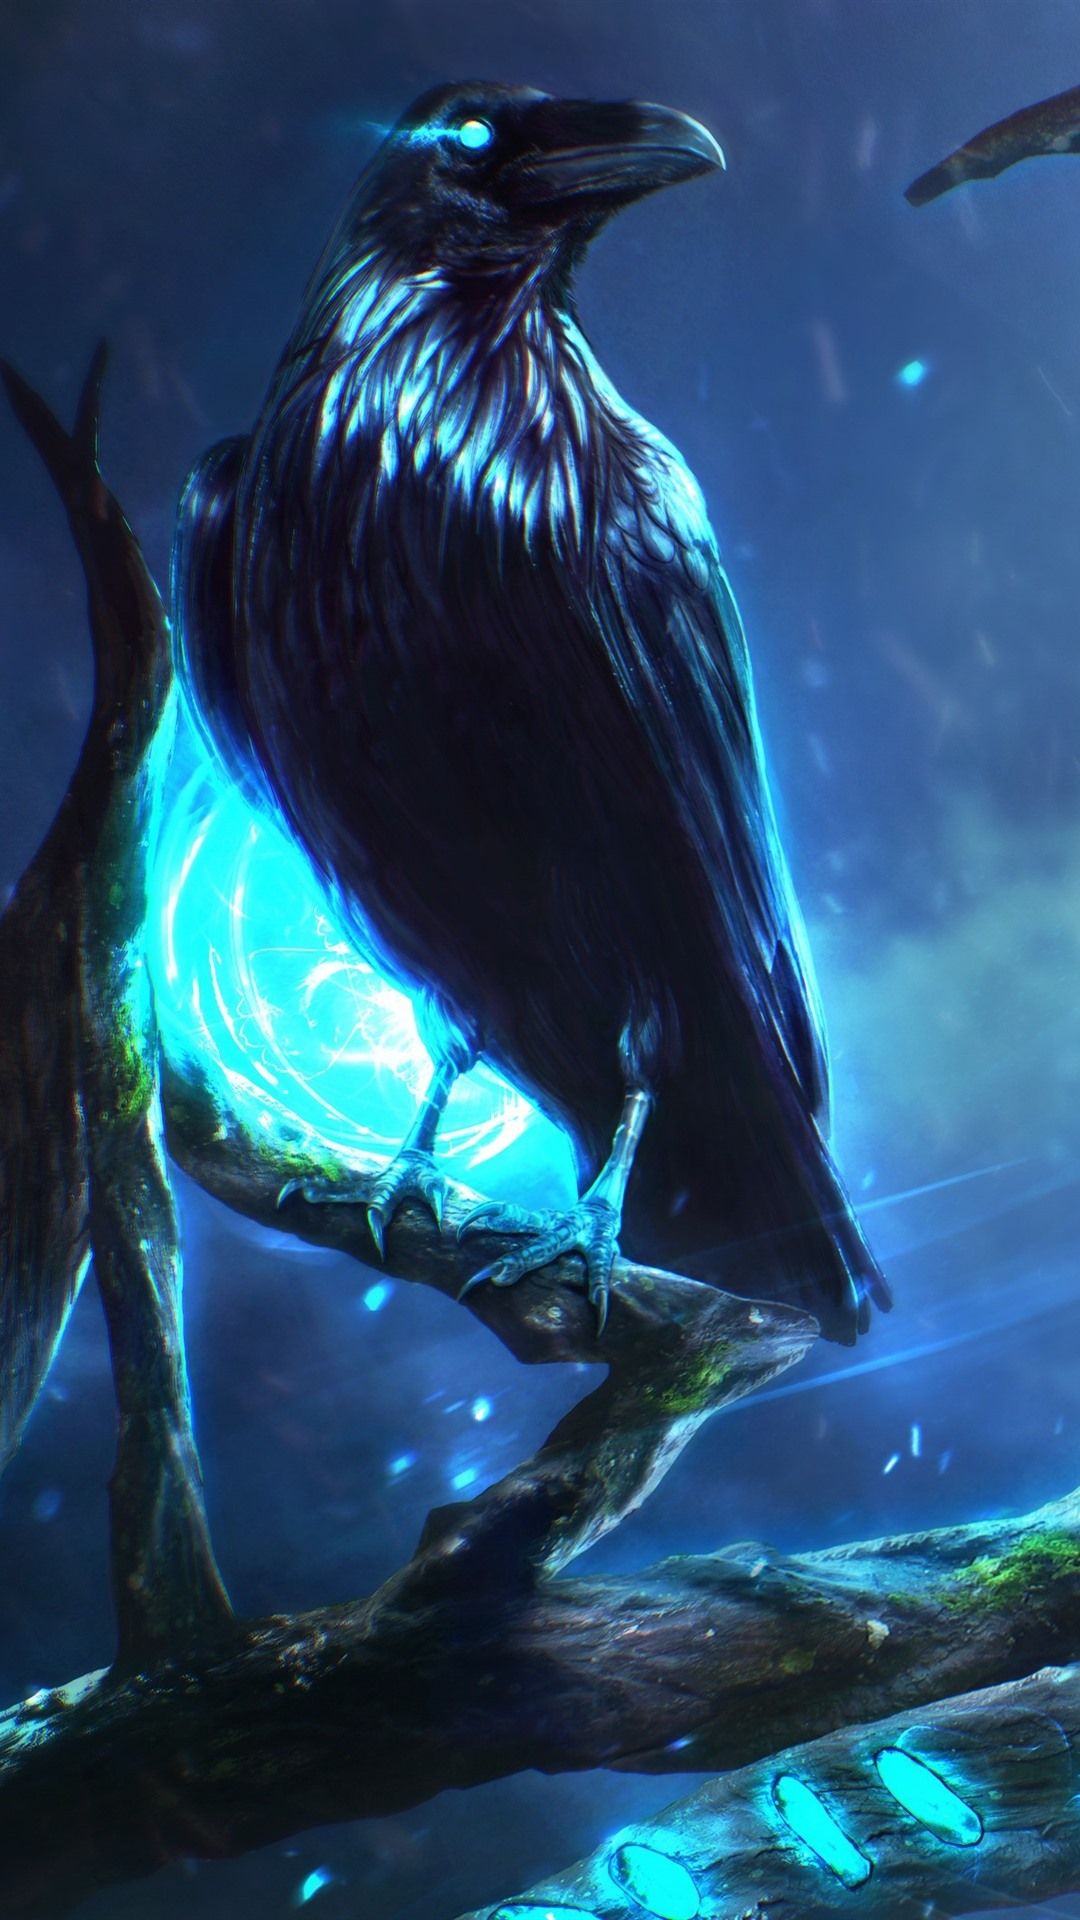 Raven Background Images  Free Download on Freepik